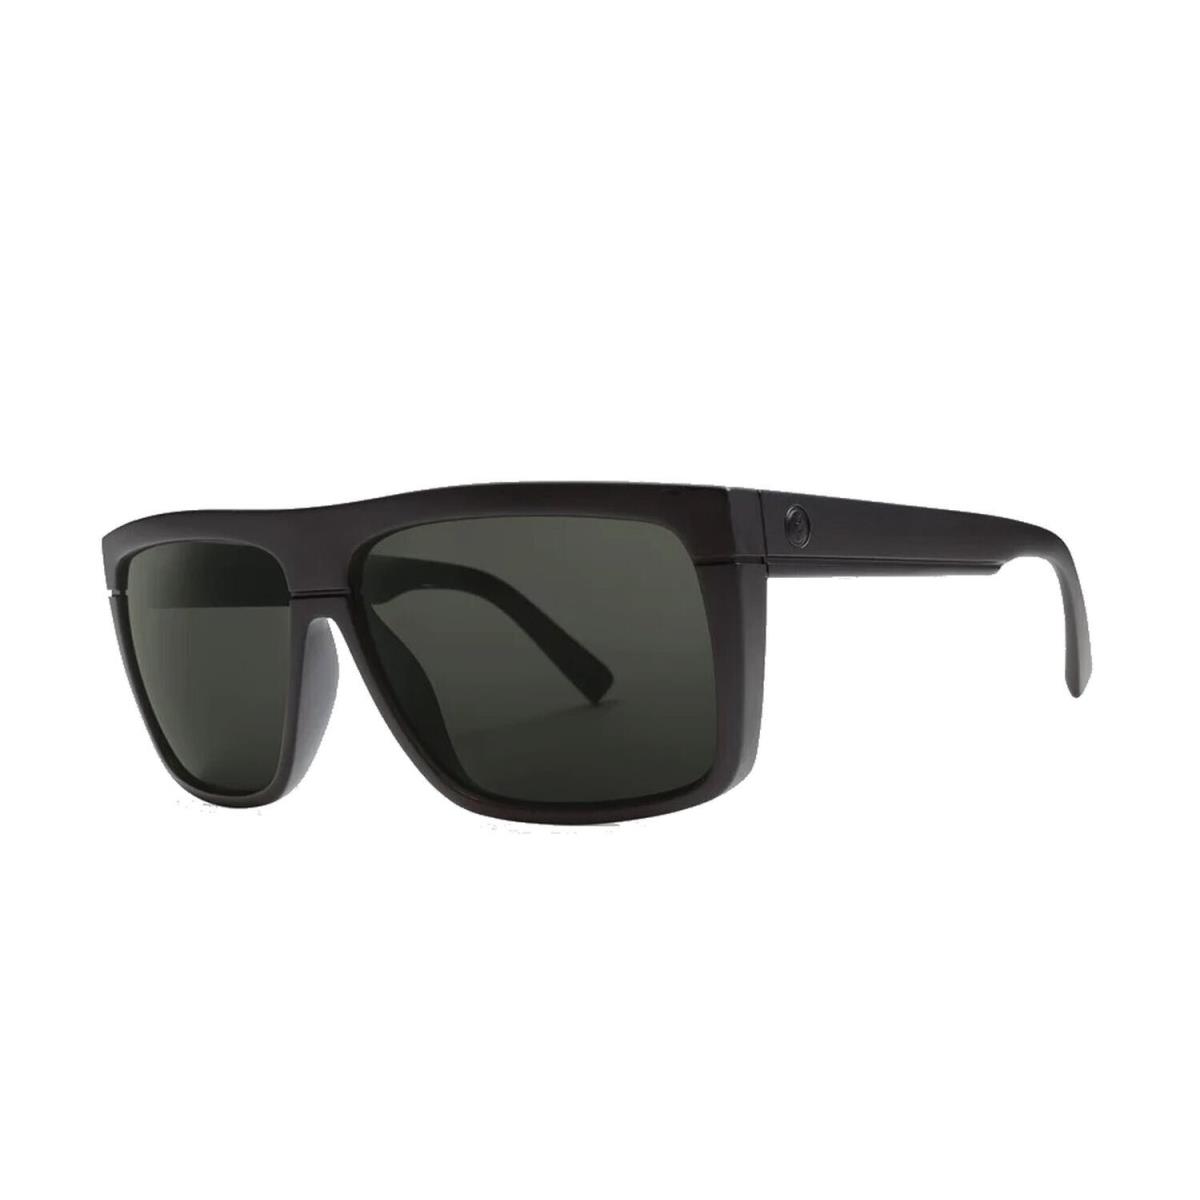 Electric Black Top Sunglasses Matte Black with Grey Lens Blacktop